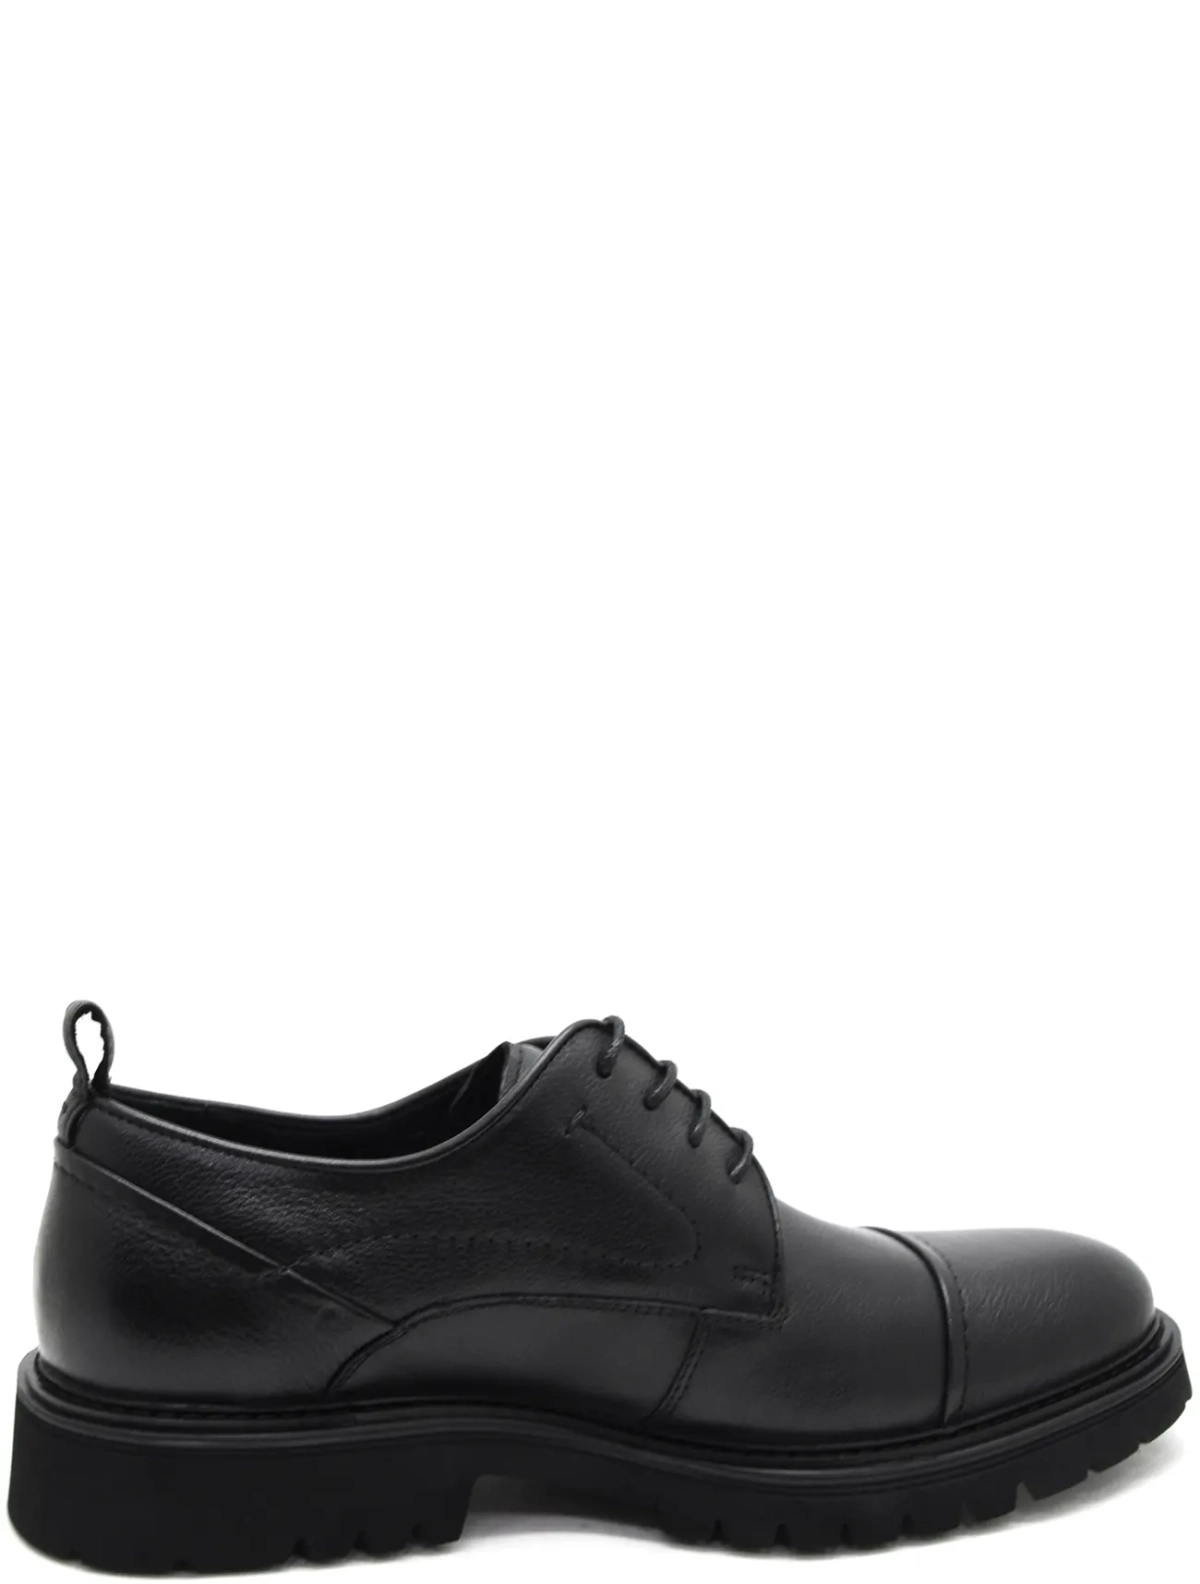 Roscote X799-22-T4677 мужские туфли